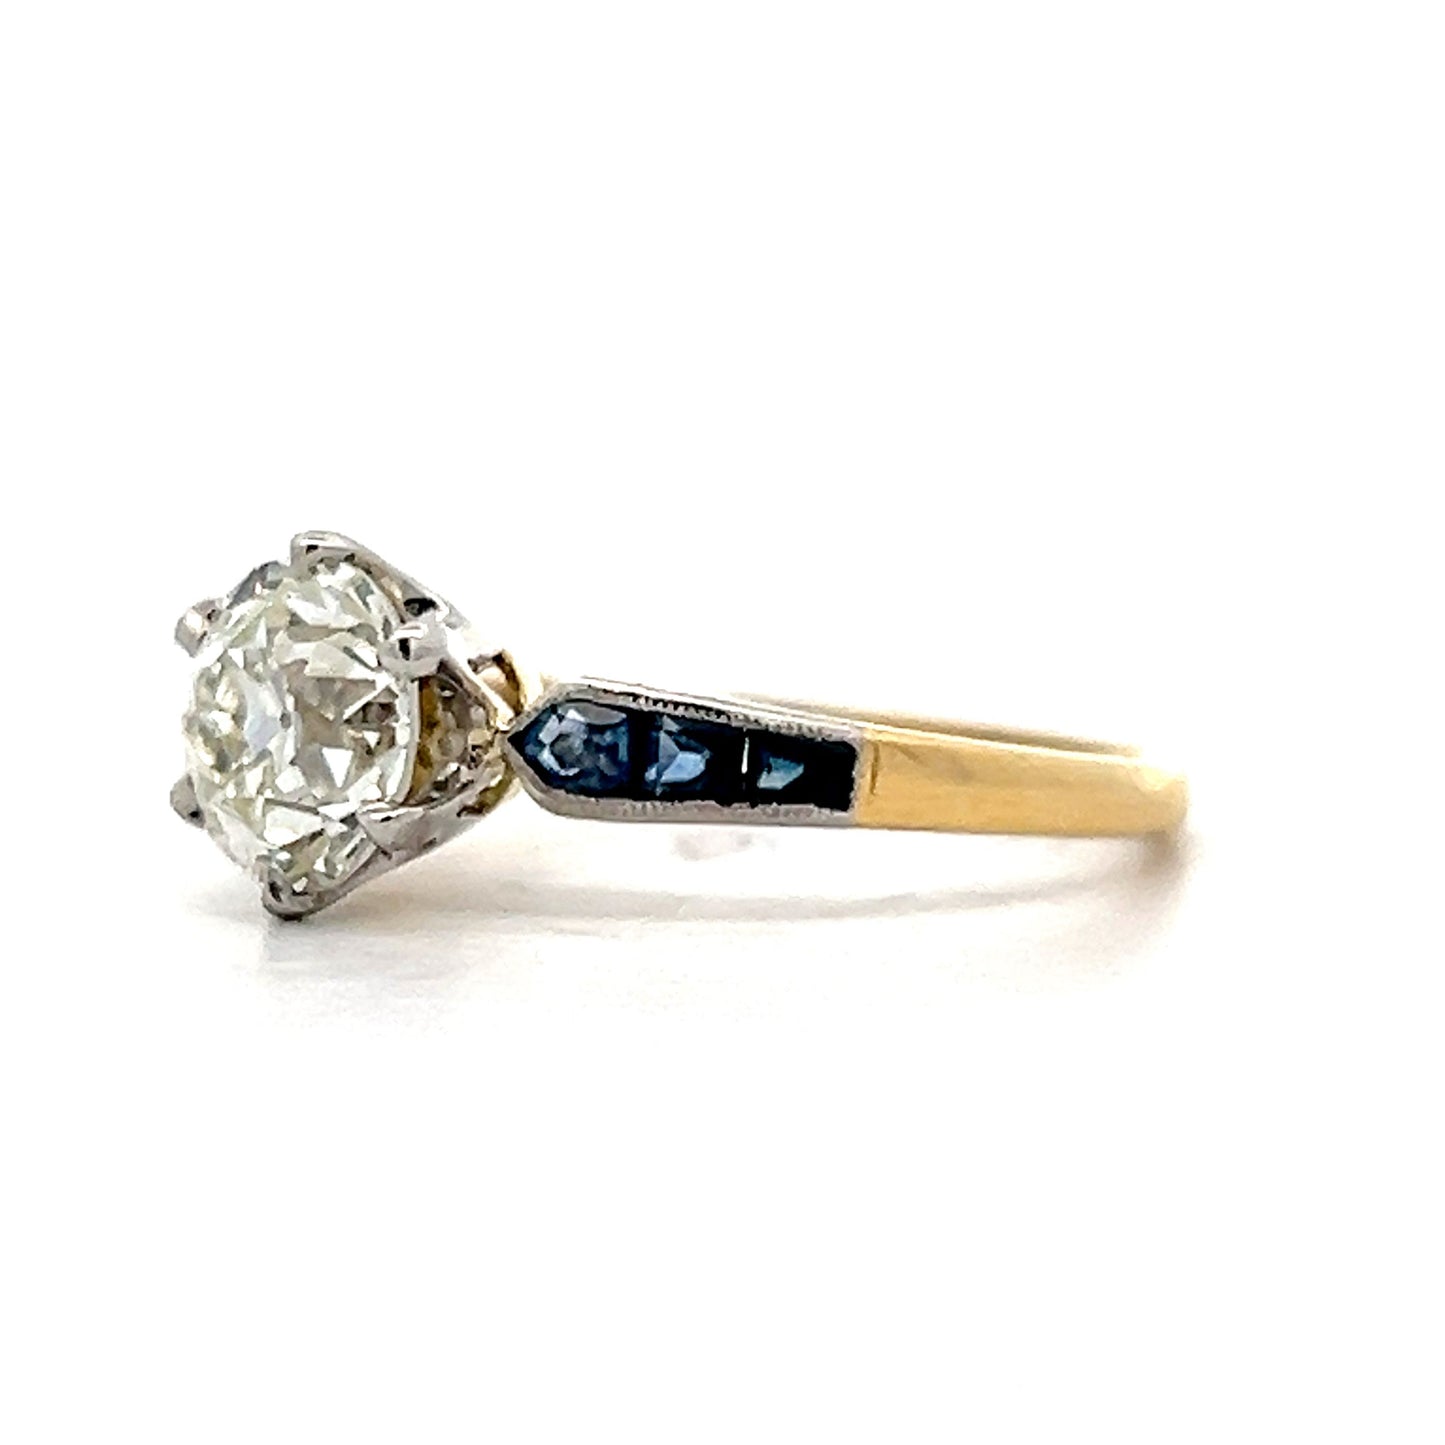 1.63 Art Deco Old European Diamond Engagement Ring in 18k